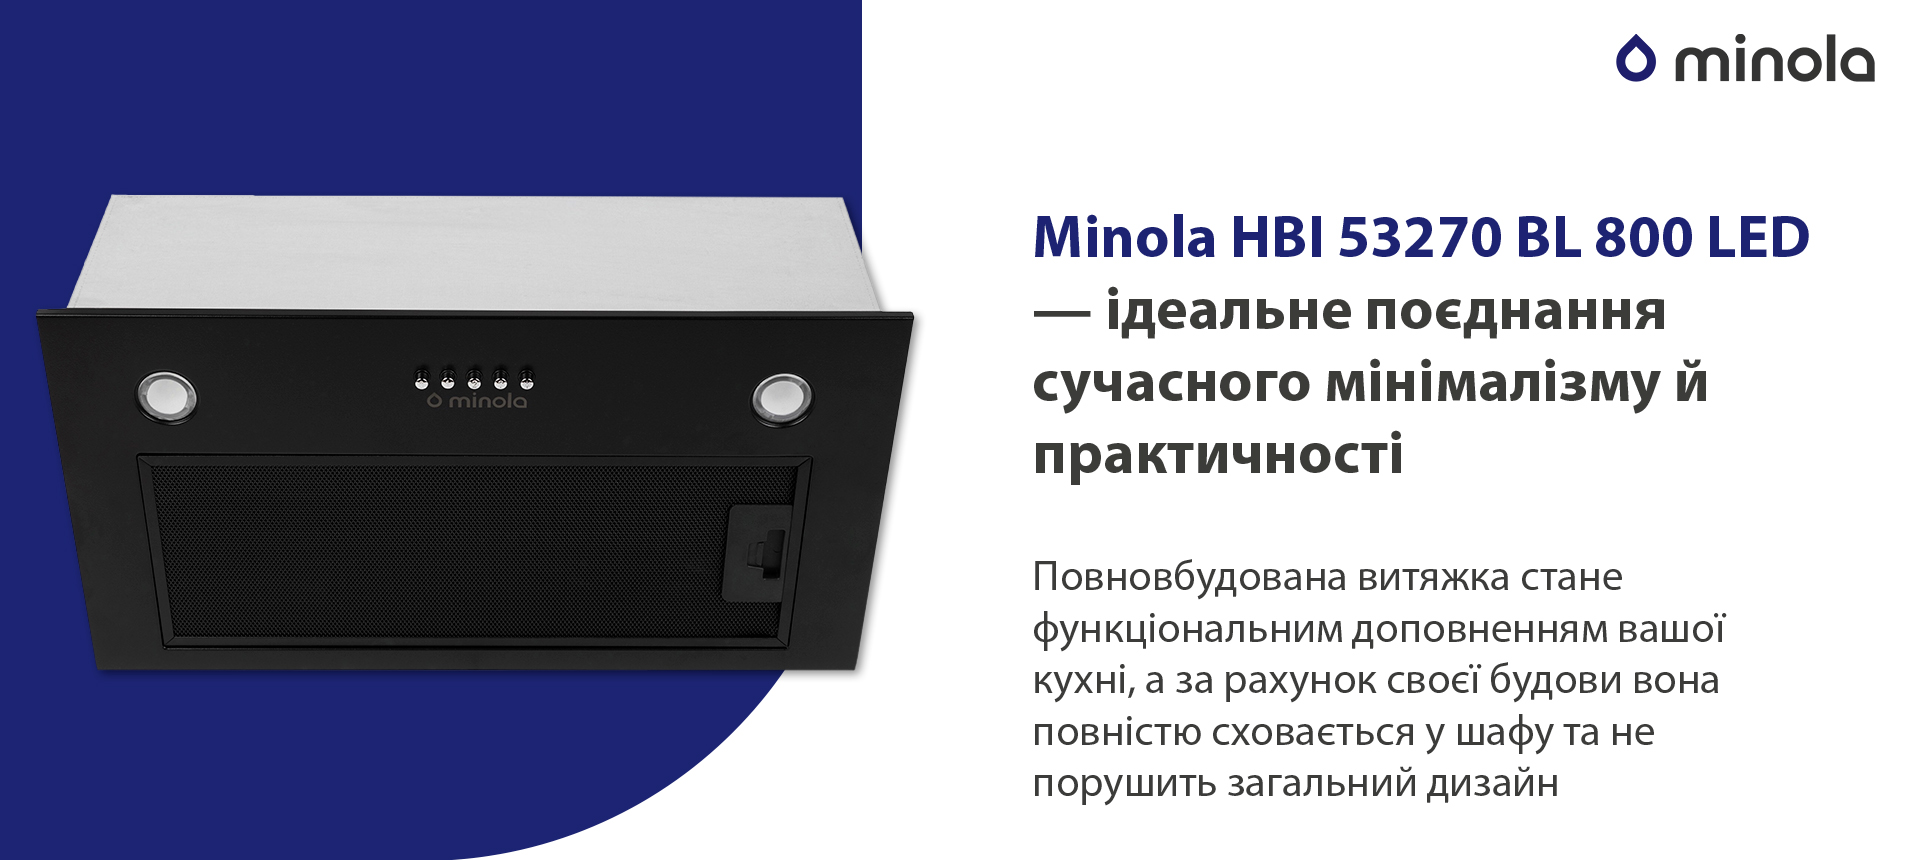 Minola HBI 53270 BL 800 LED в магазине в Киеве - фото 10